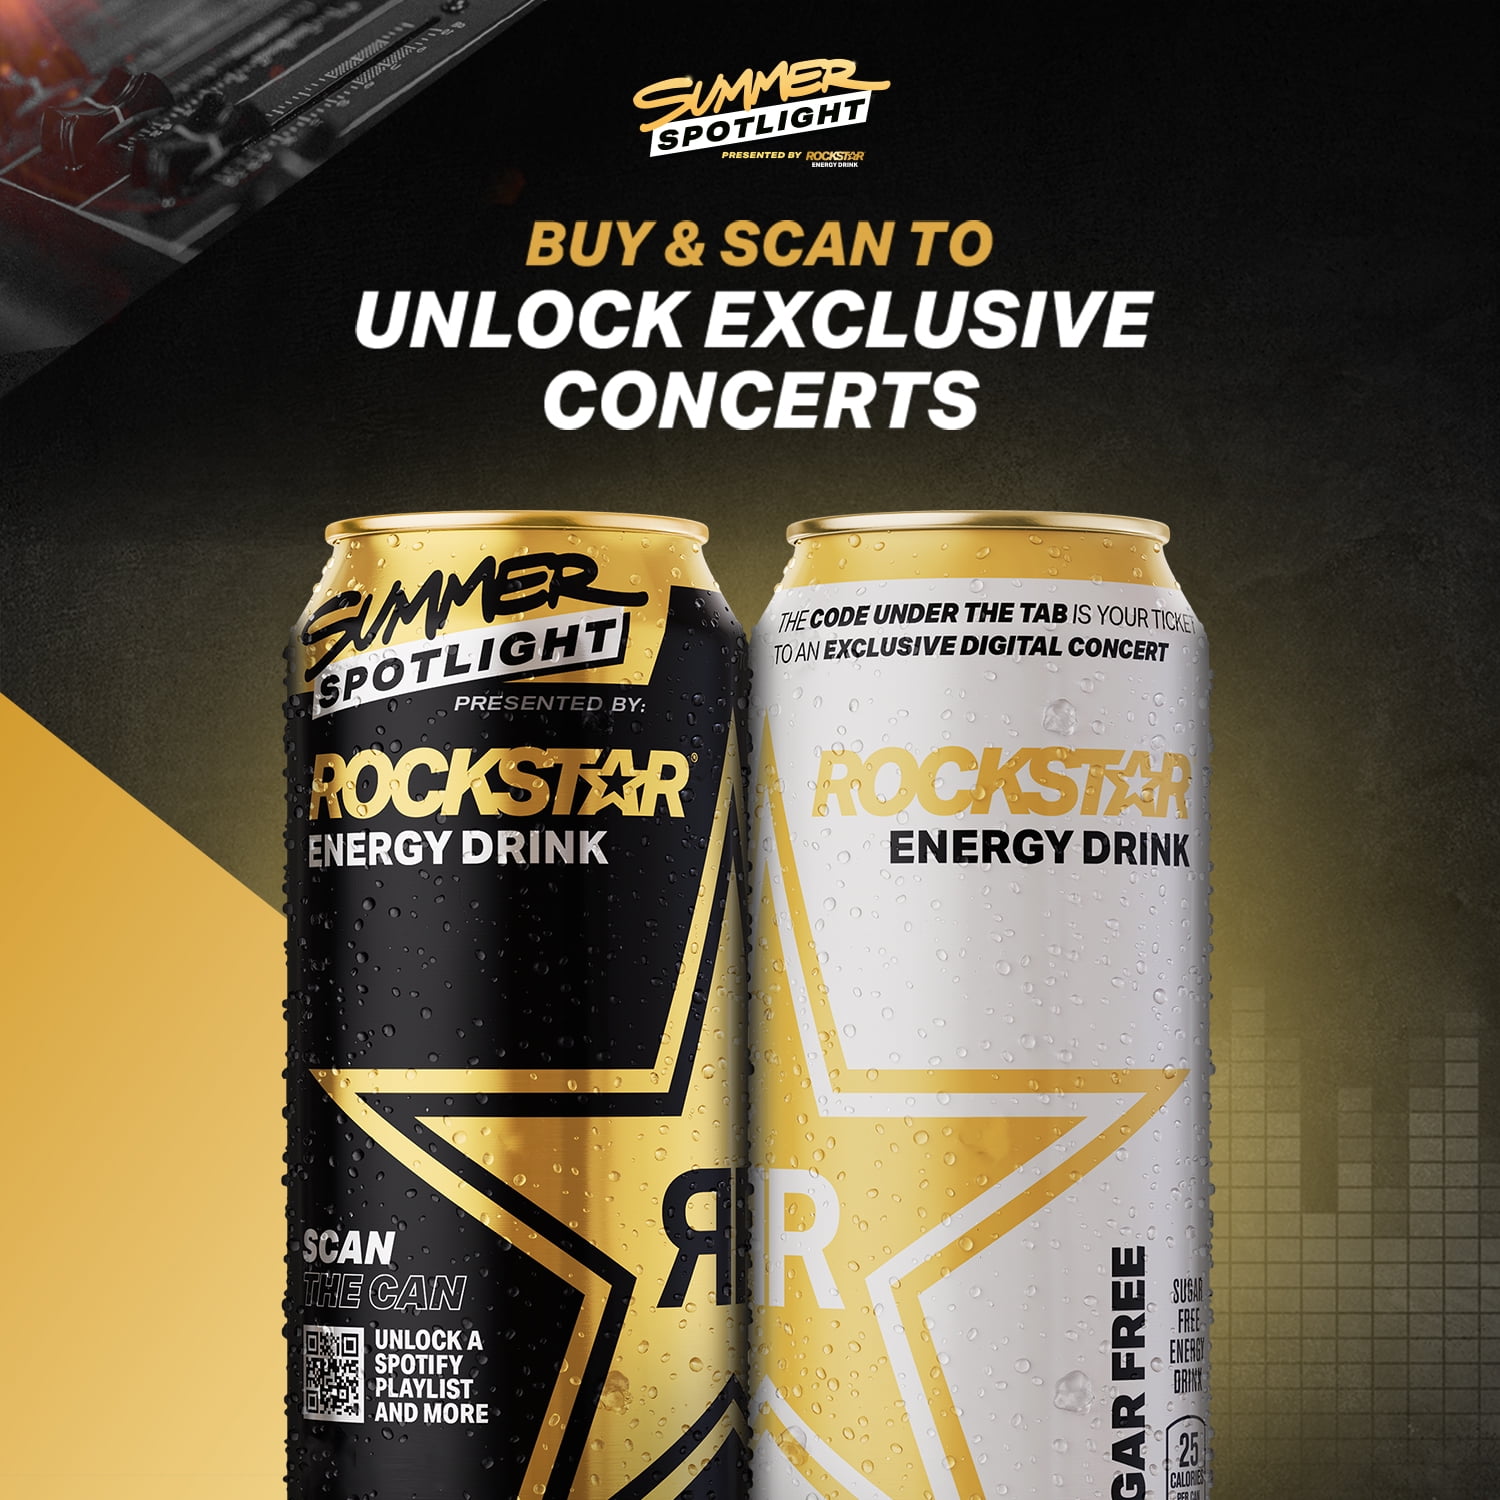 Rockstar® Original Flavor Energy Drink Can, 16 fl oz - Harris Teeter